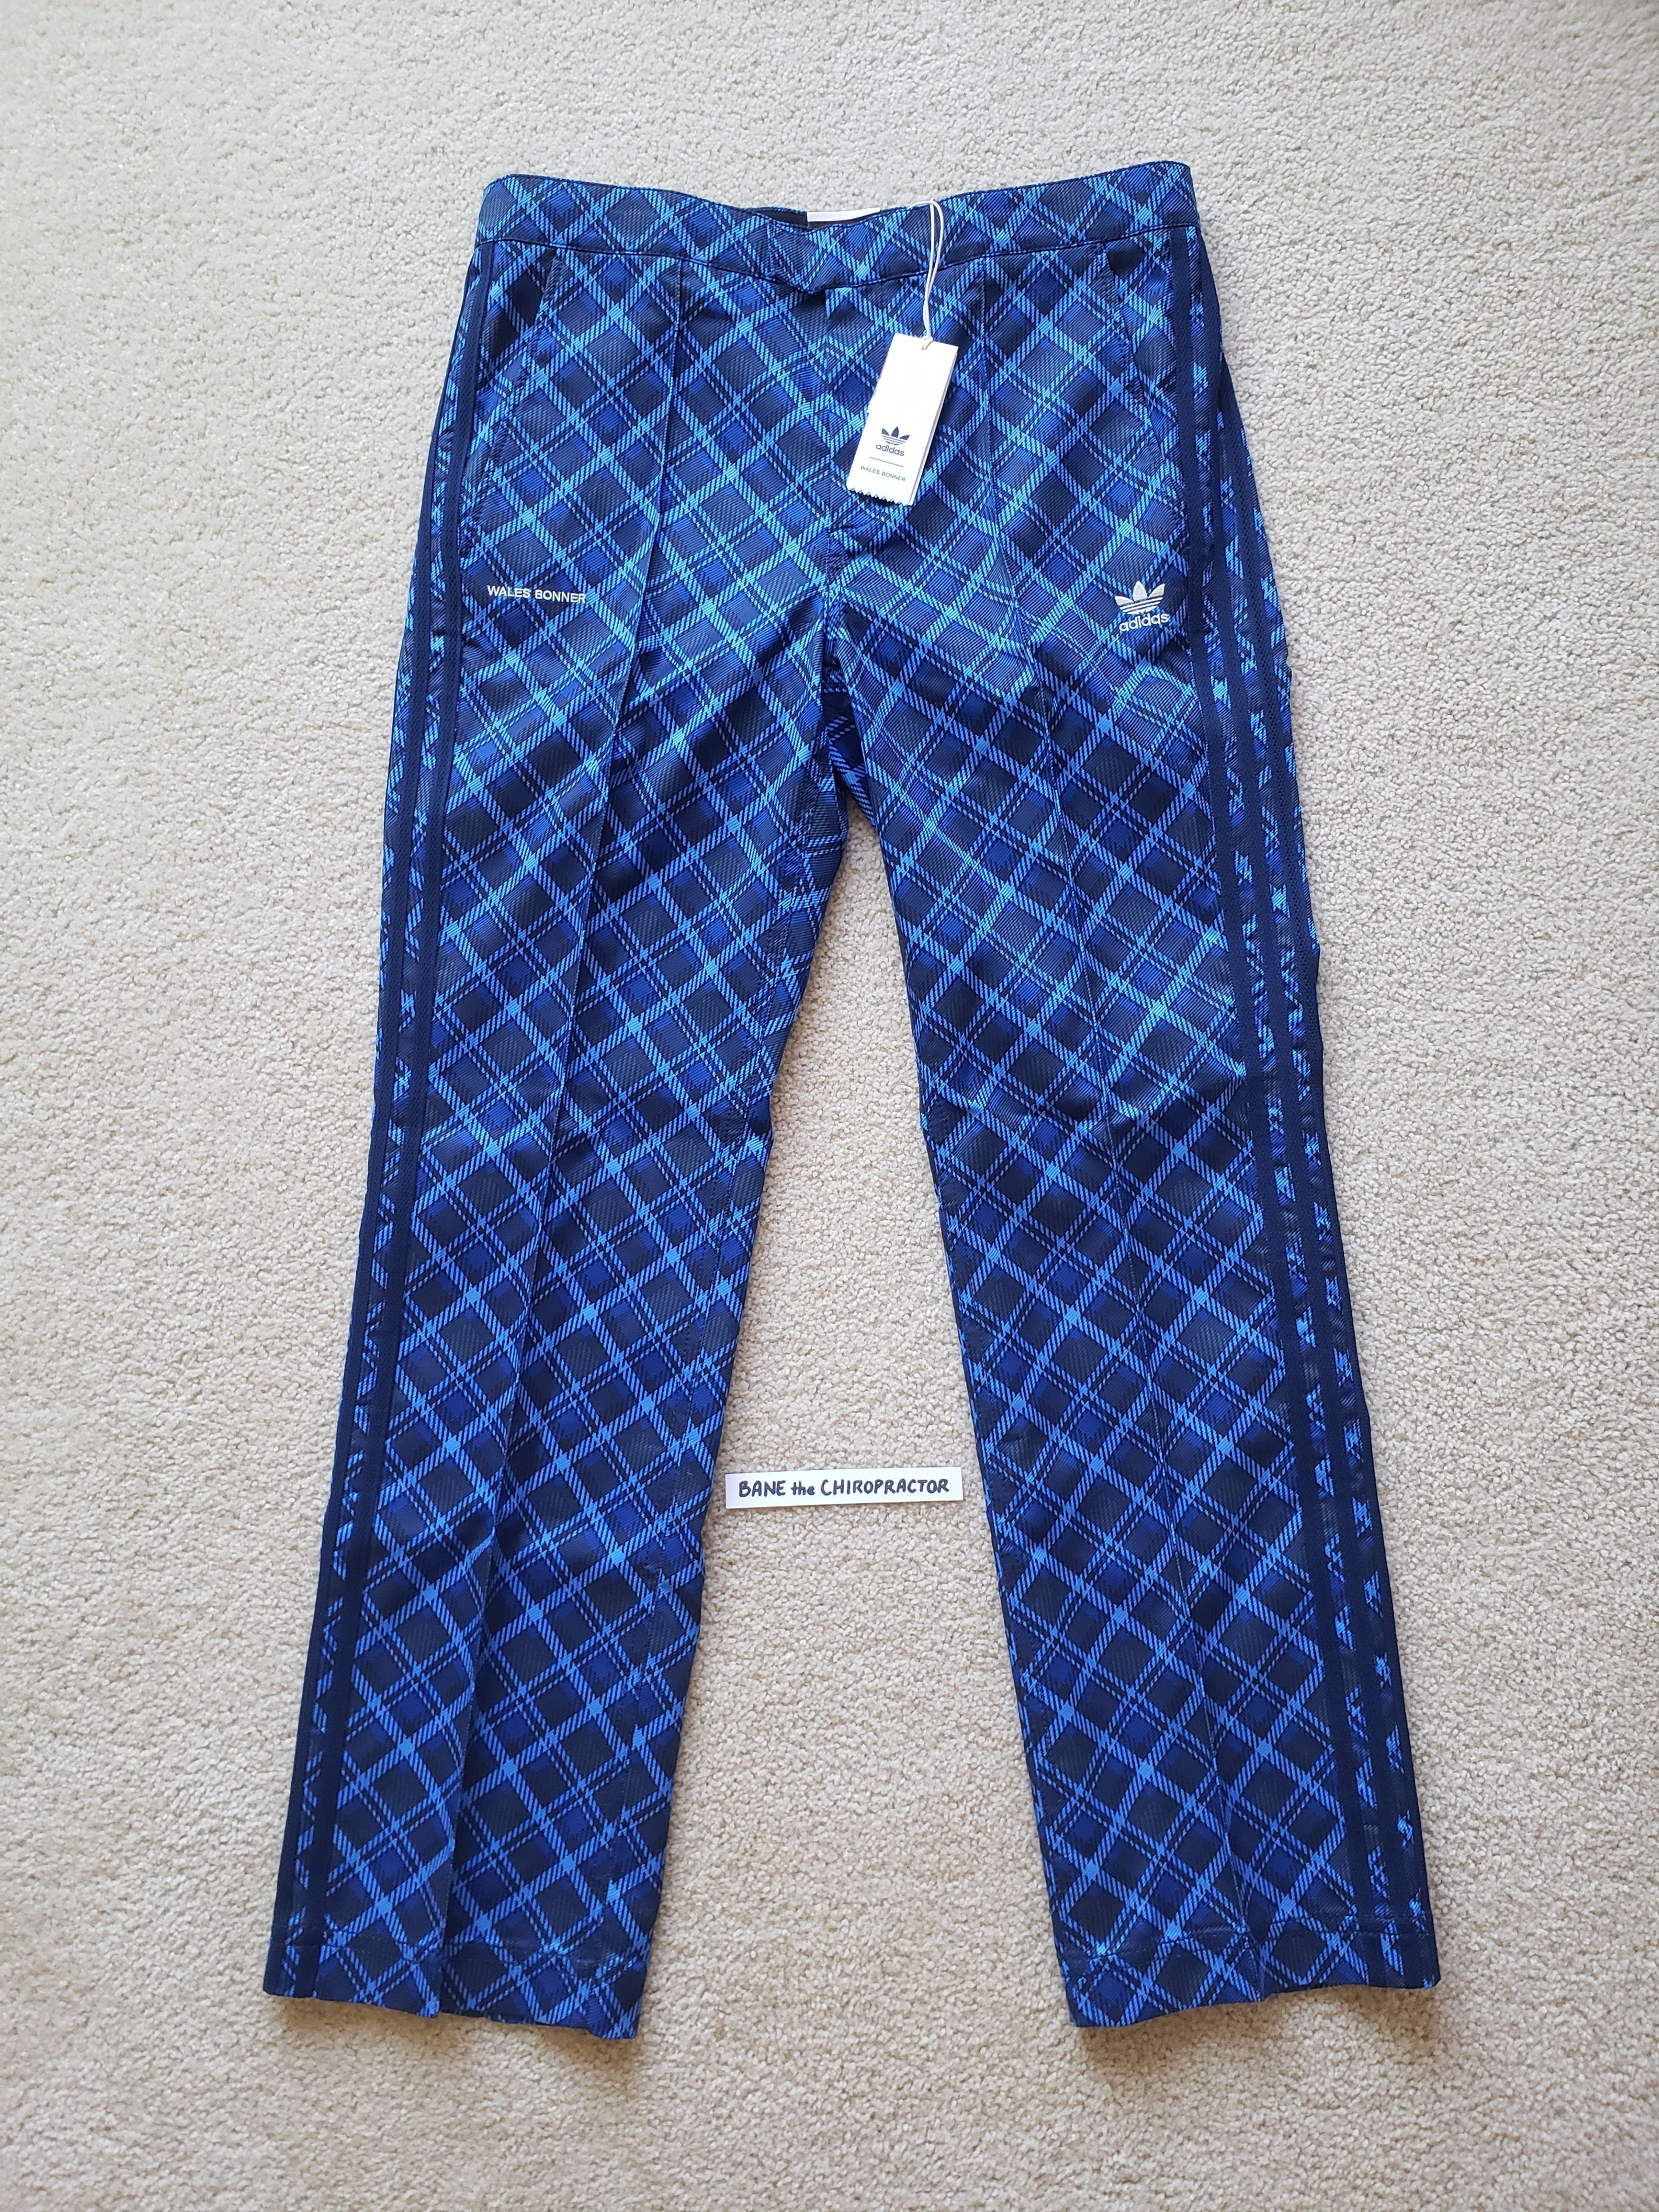 Adidas NEW ADIDAS x Wales Bonner Blue Tartan Track Pants L GU0753 Size US 36 / EU 52 - 1 Preview